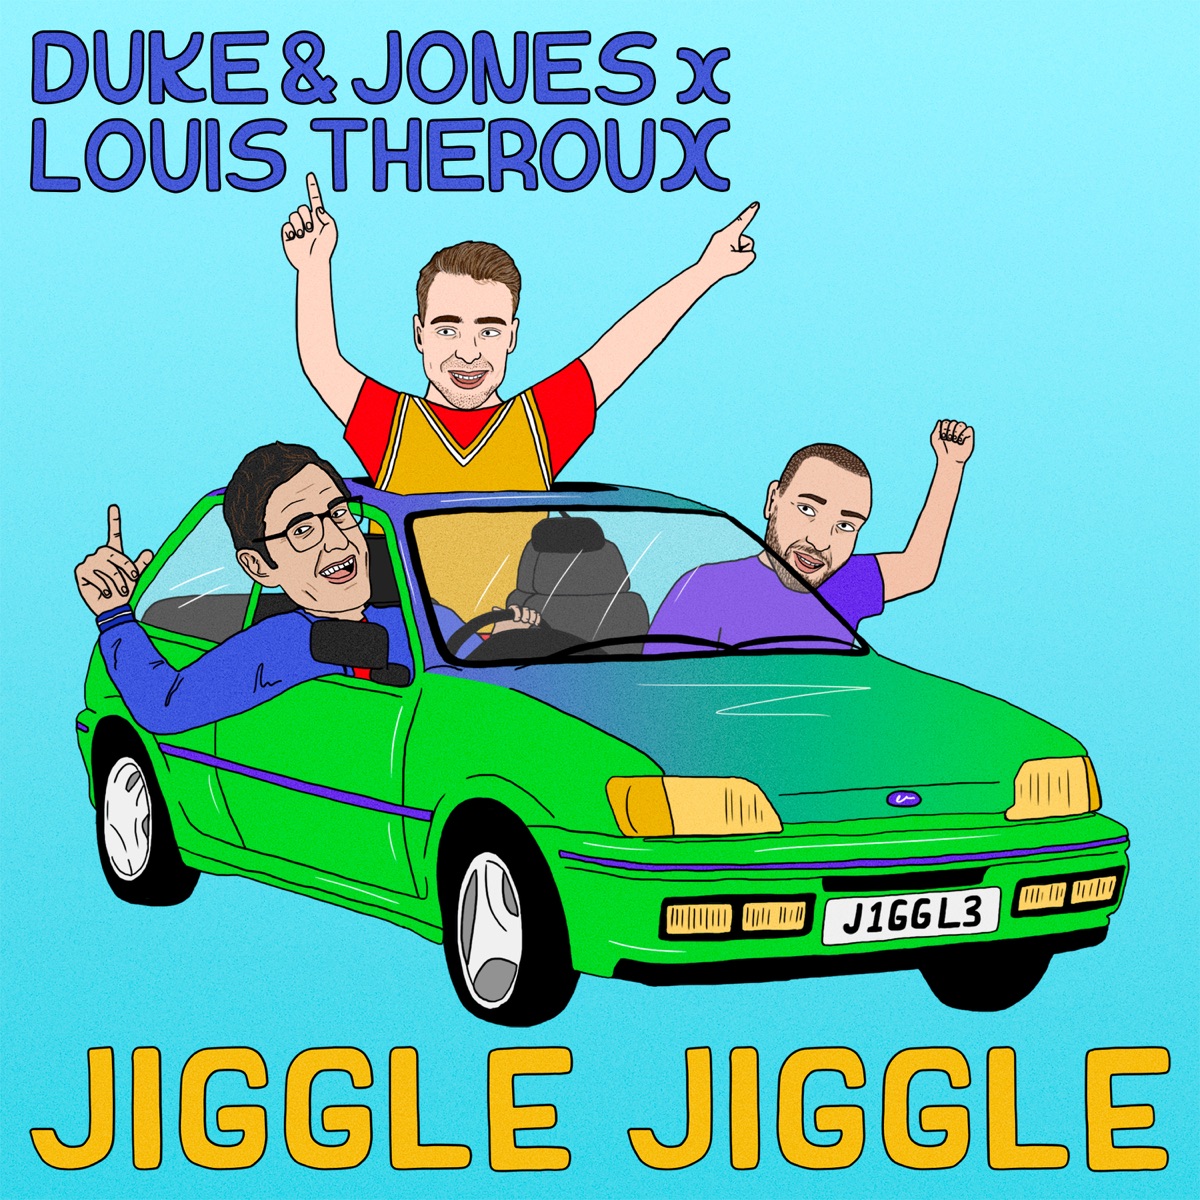 Bounce of Boobs - Single - Album by Dj Slitker - Apple Music